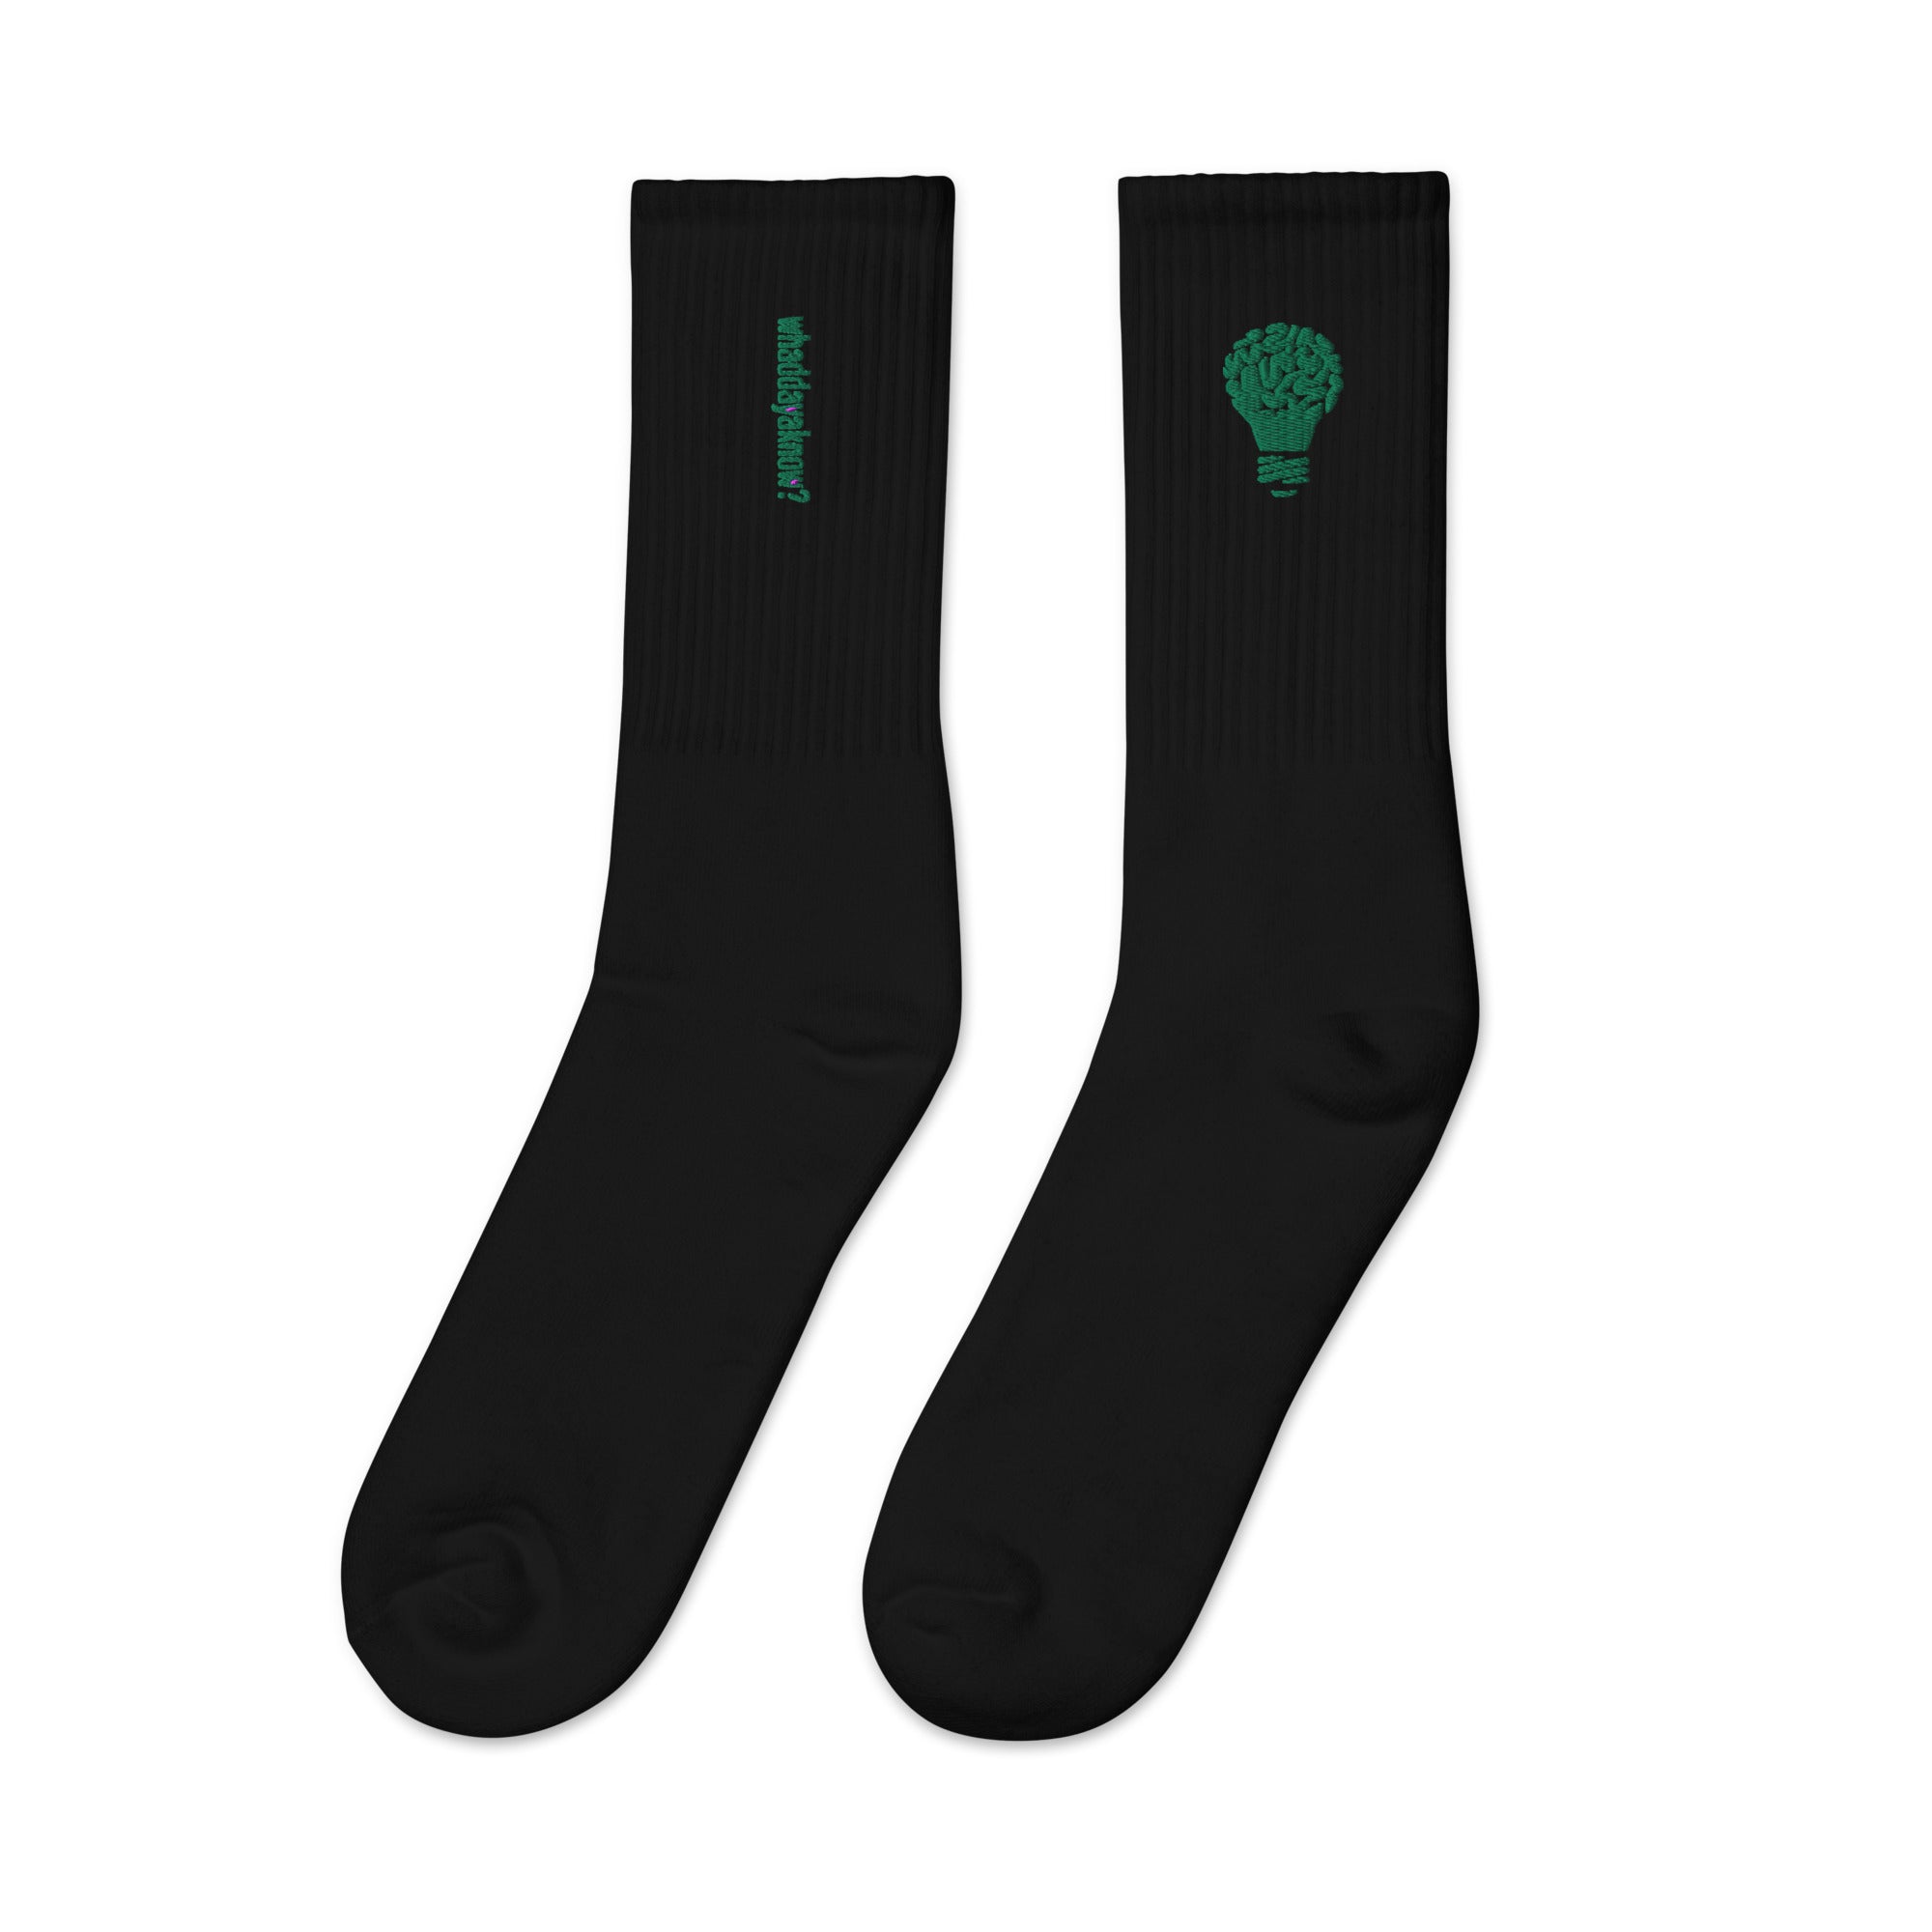 Whaddayaknow? Quiz Night Comfort - Embroidered Logo Socks